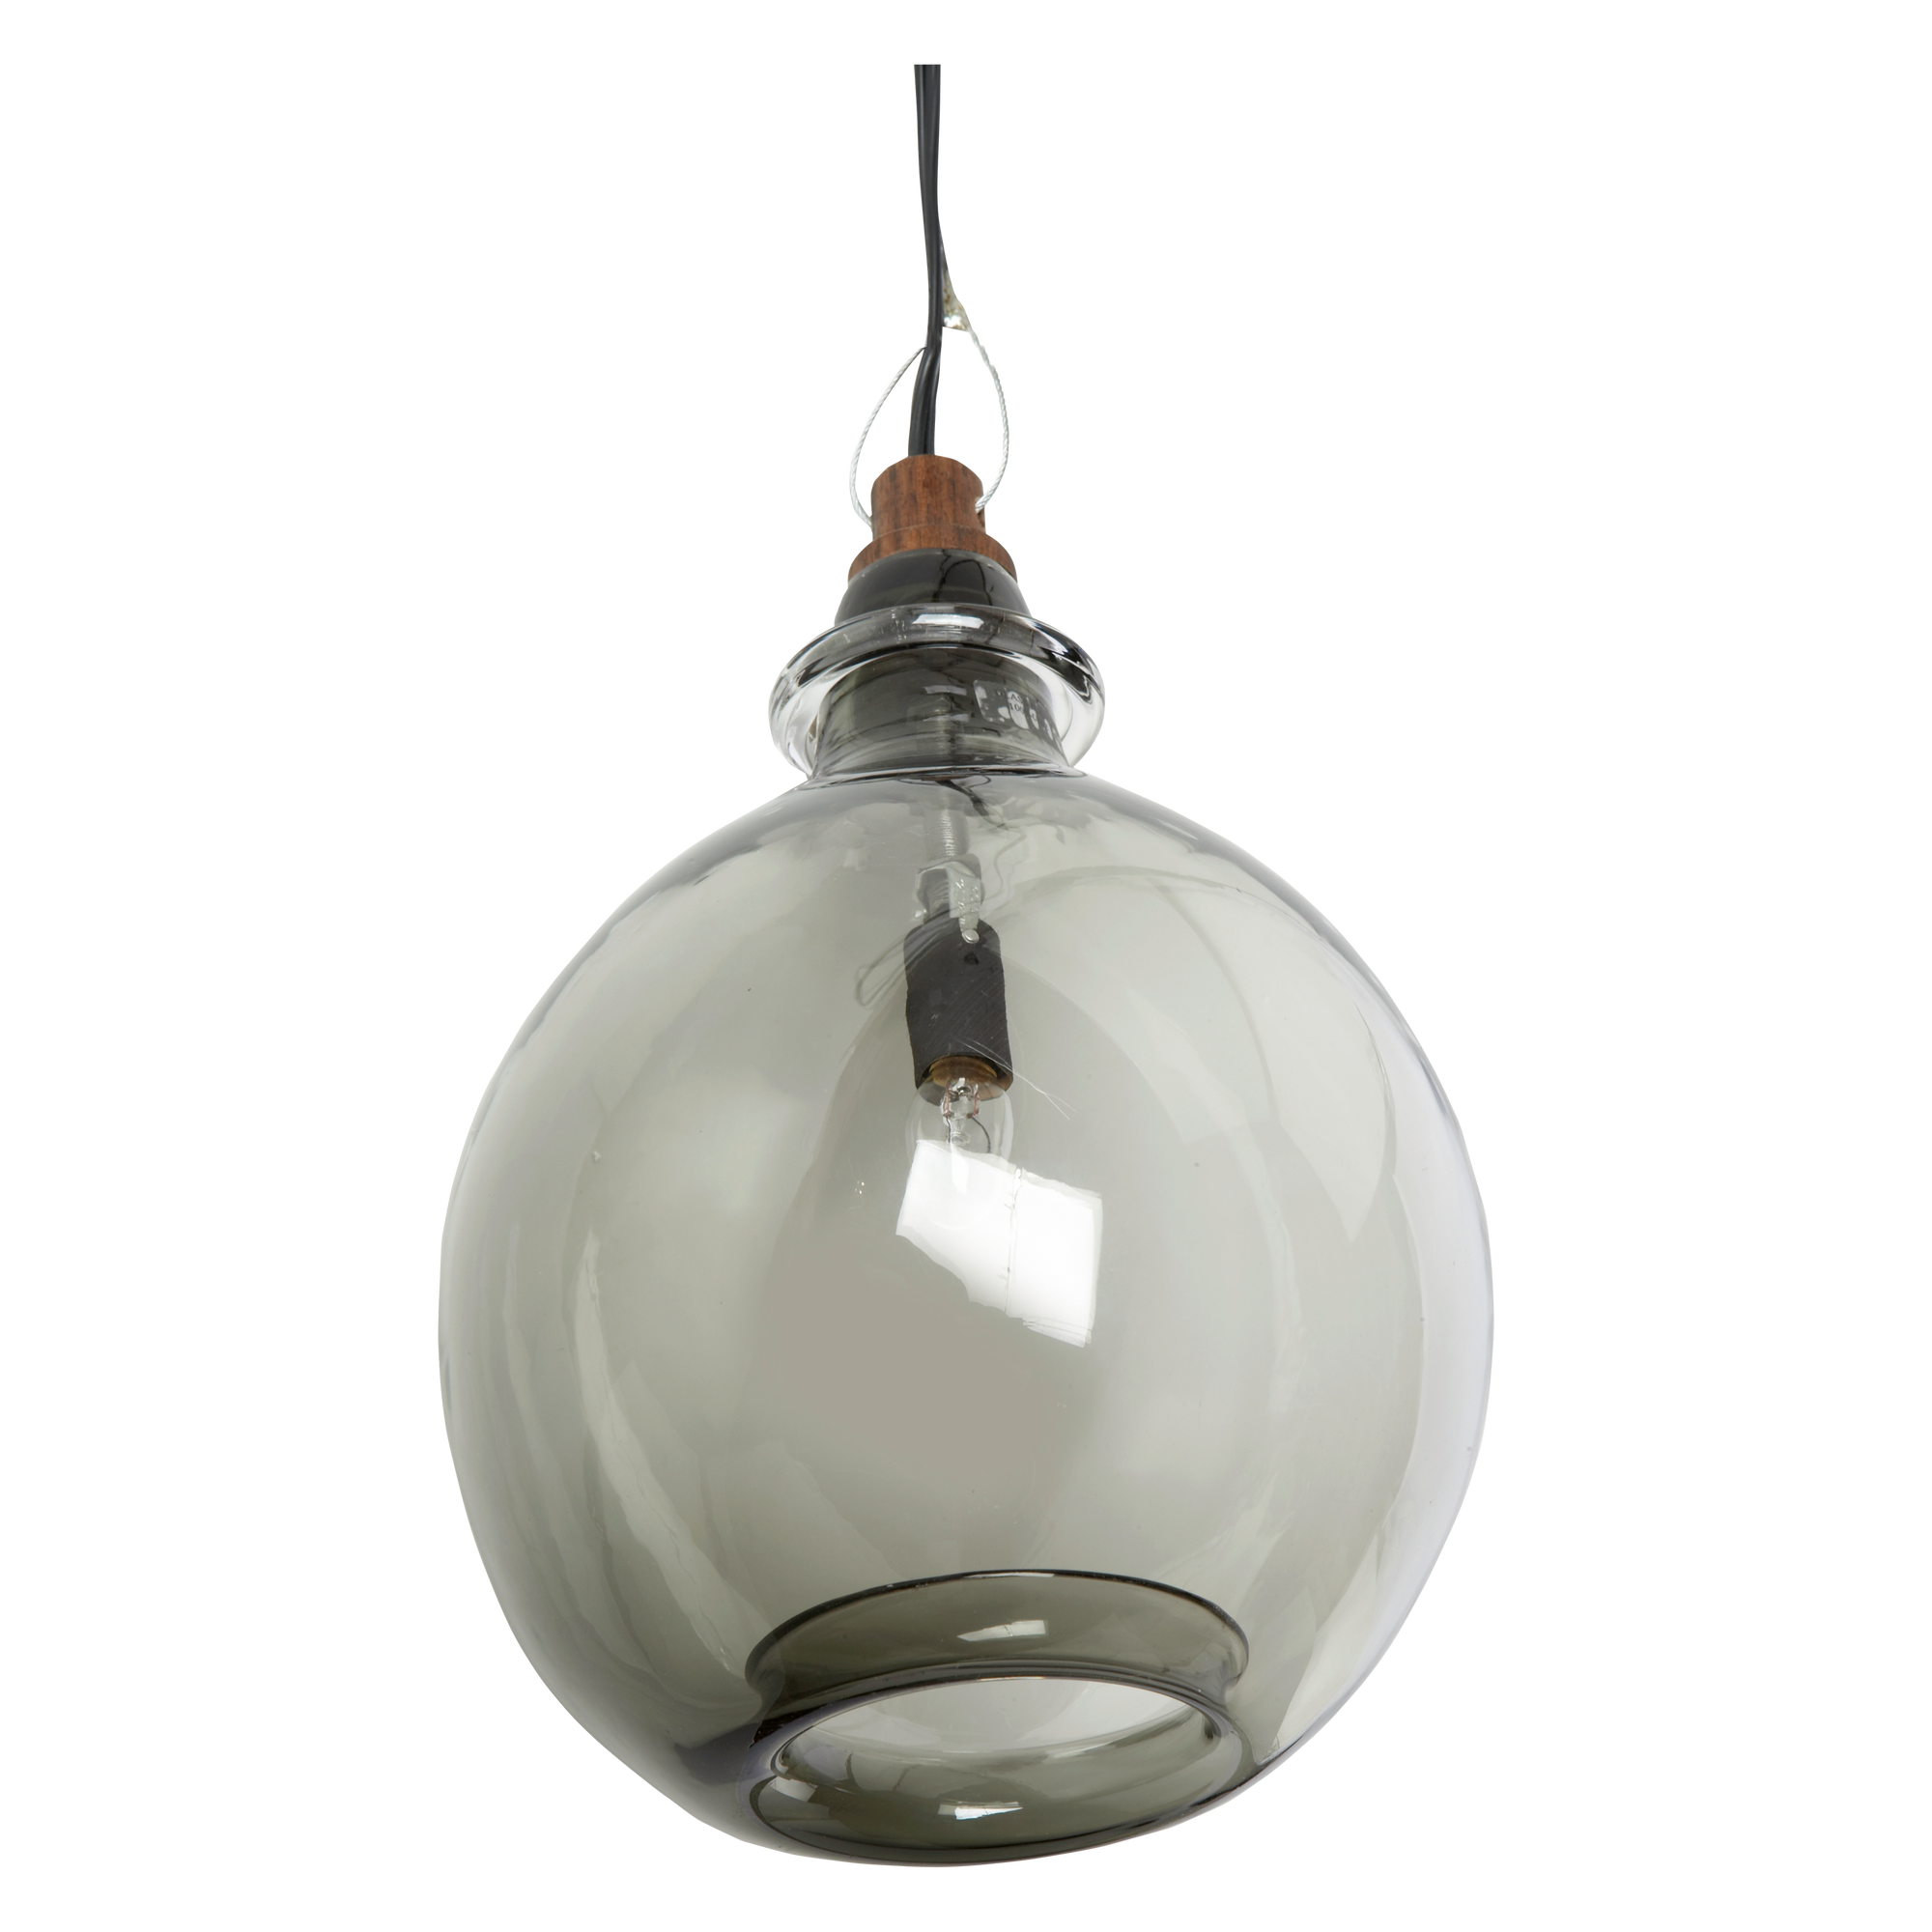 A minimalist pendant made of hand-blown smoked glass.